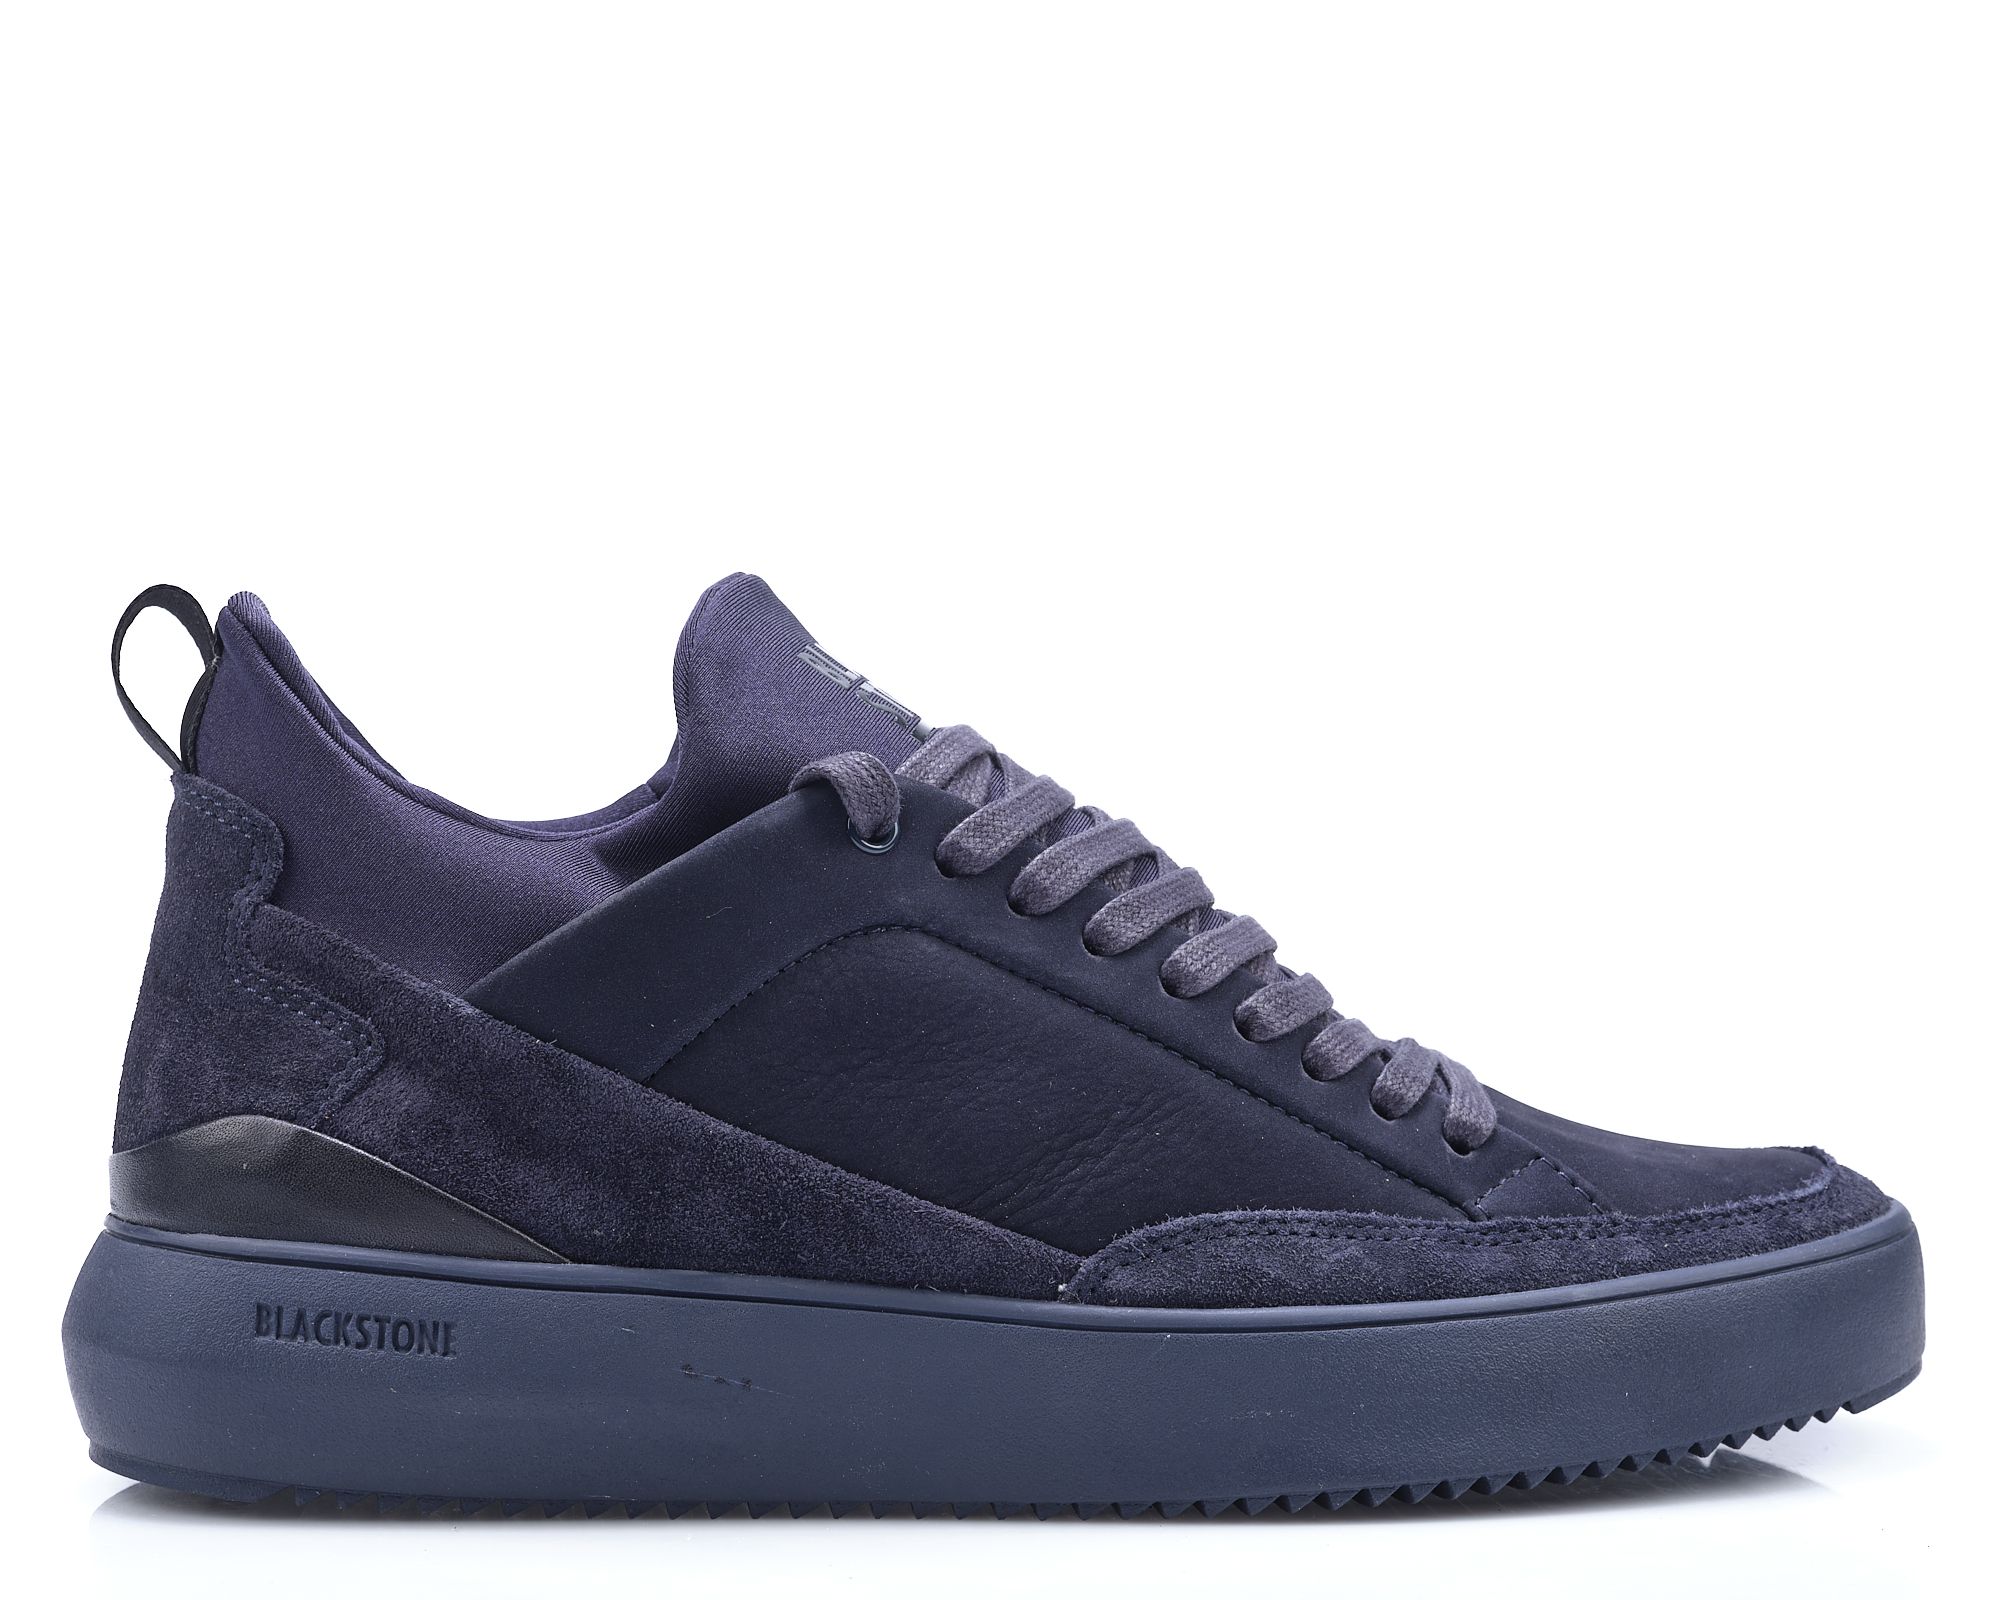 Blackstone Sneakers Donker blauw 079408-002-40